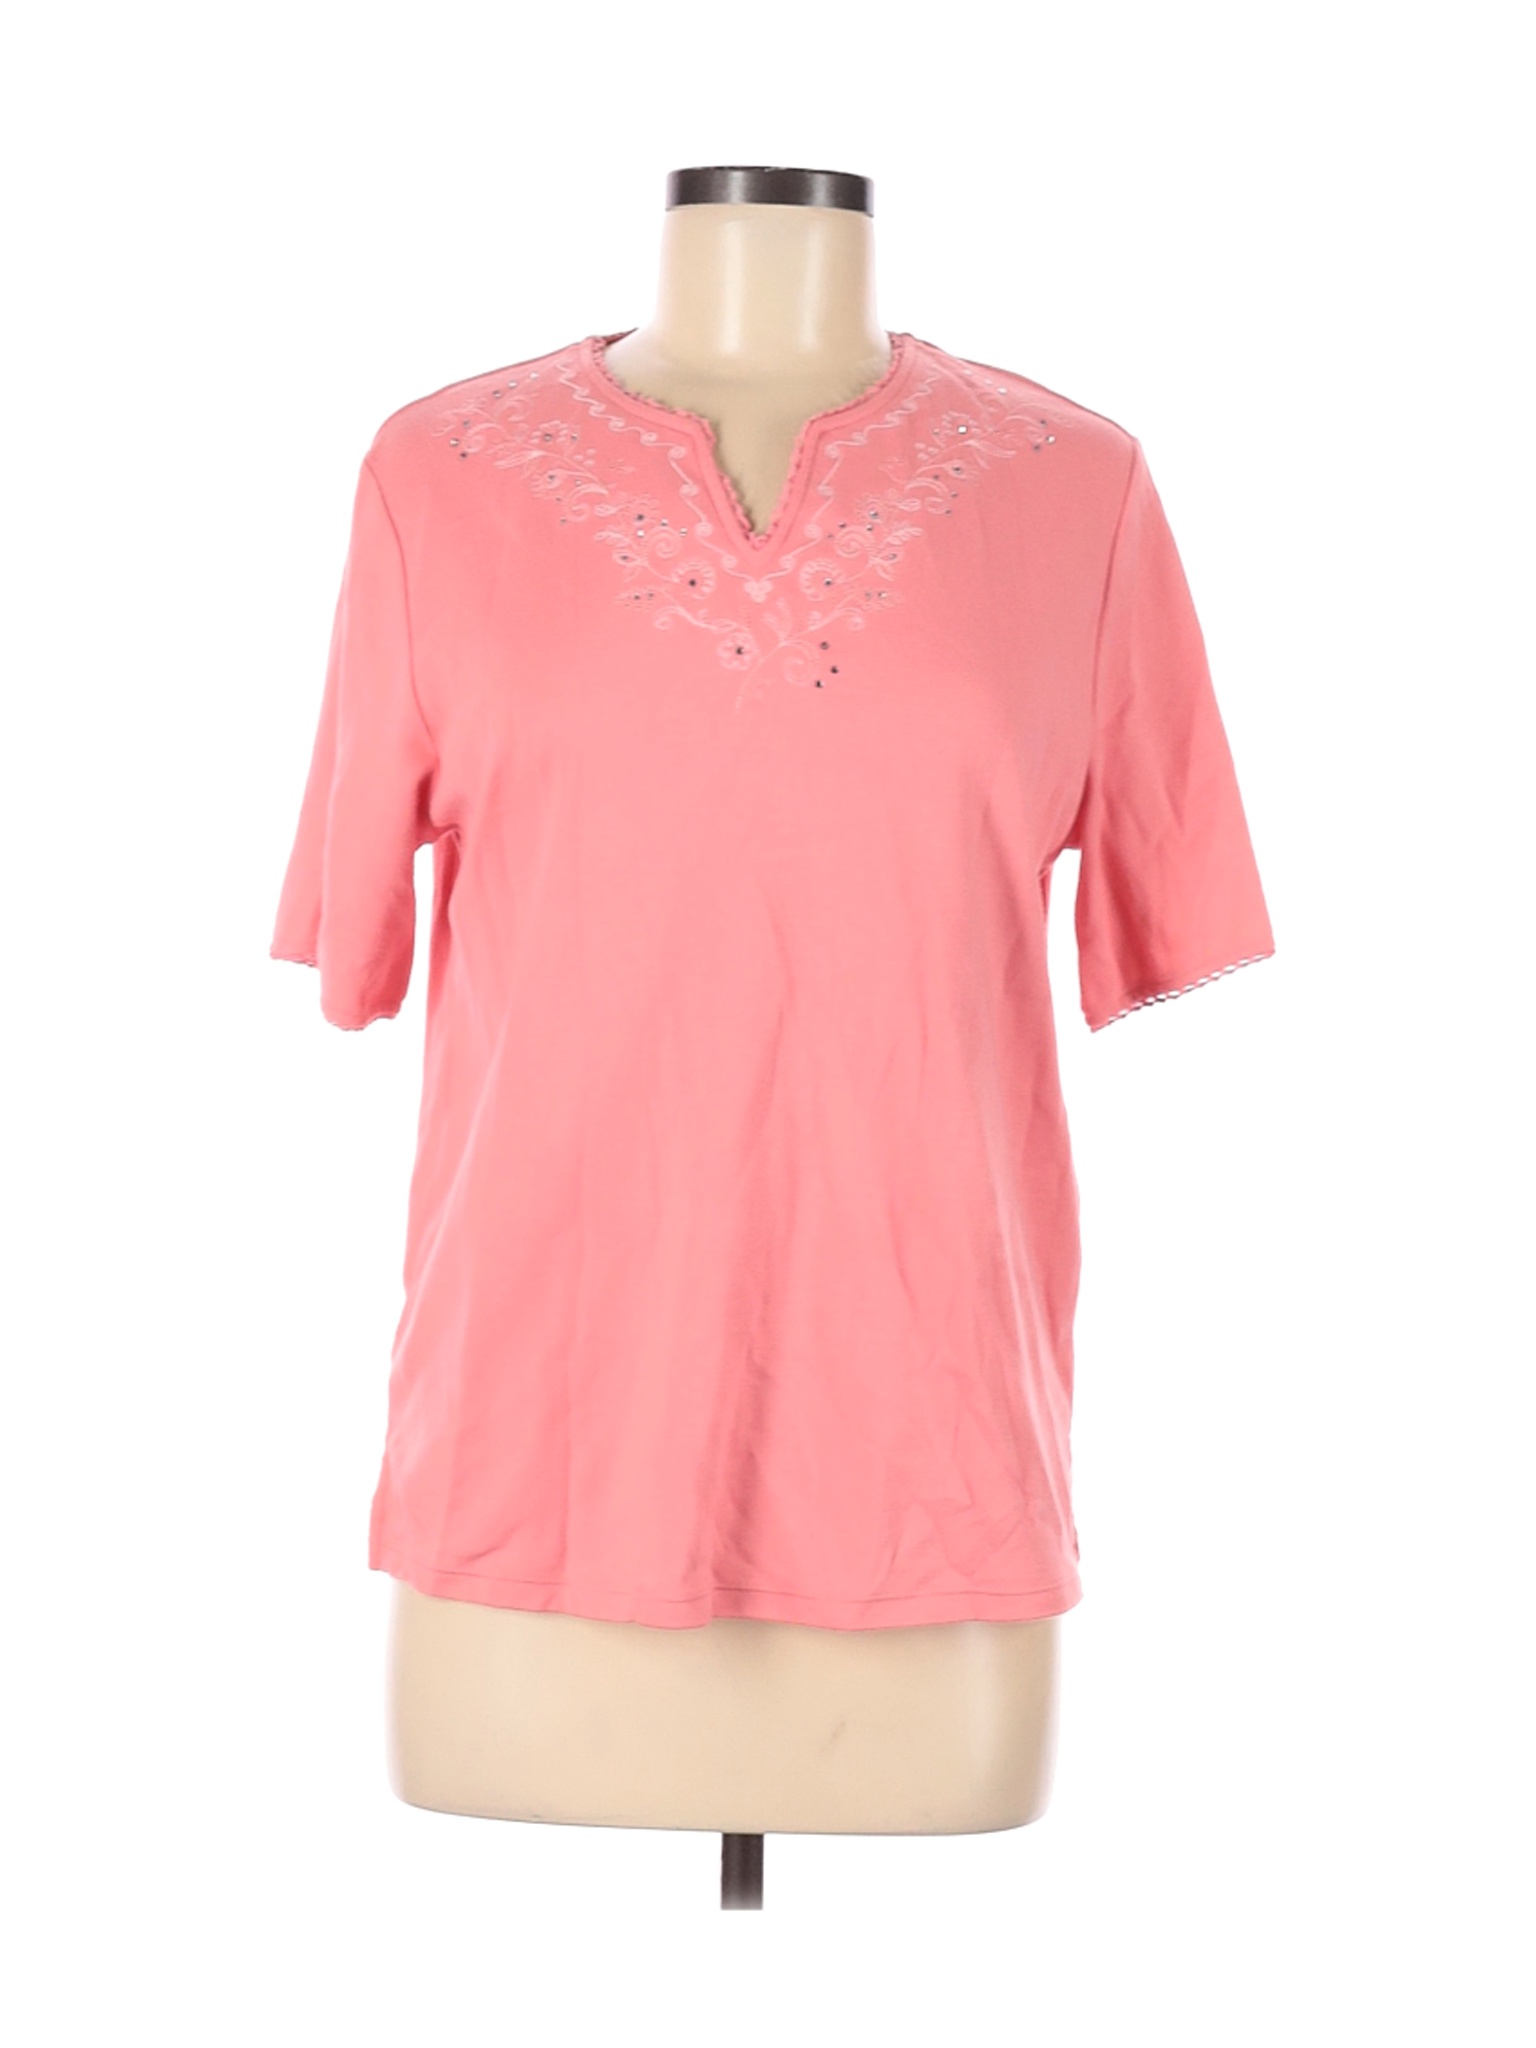 Draper's & Damon's Women Pink Short Sleeve Top M | eBay